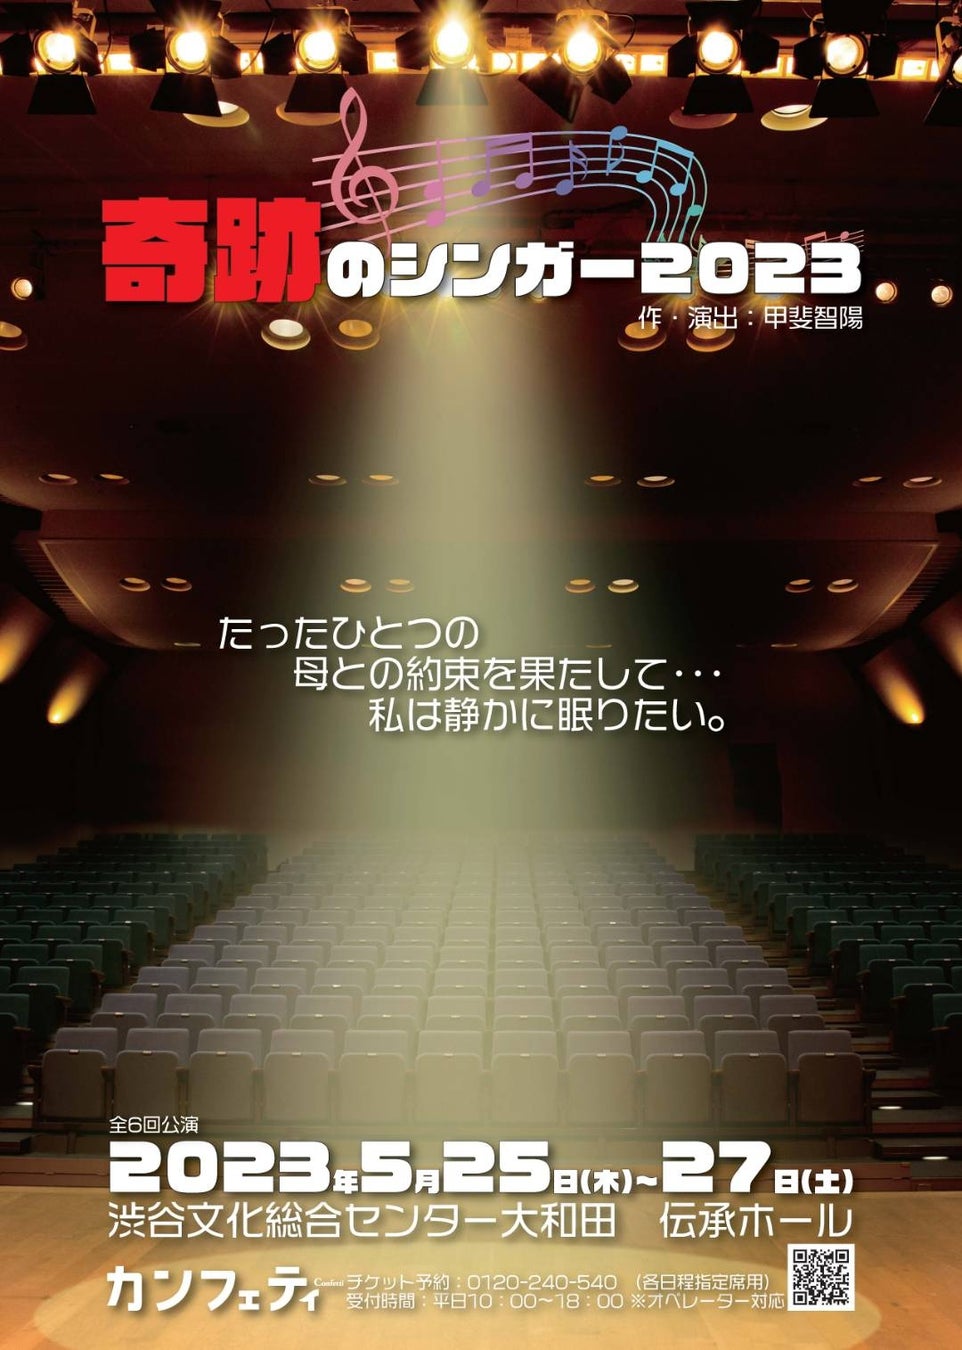 YOSHIKIピアノ演奏の『スペシャル映像』と生パフォーマンスの融合という前代未聞の一夜限りの特別なステージ！